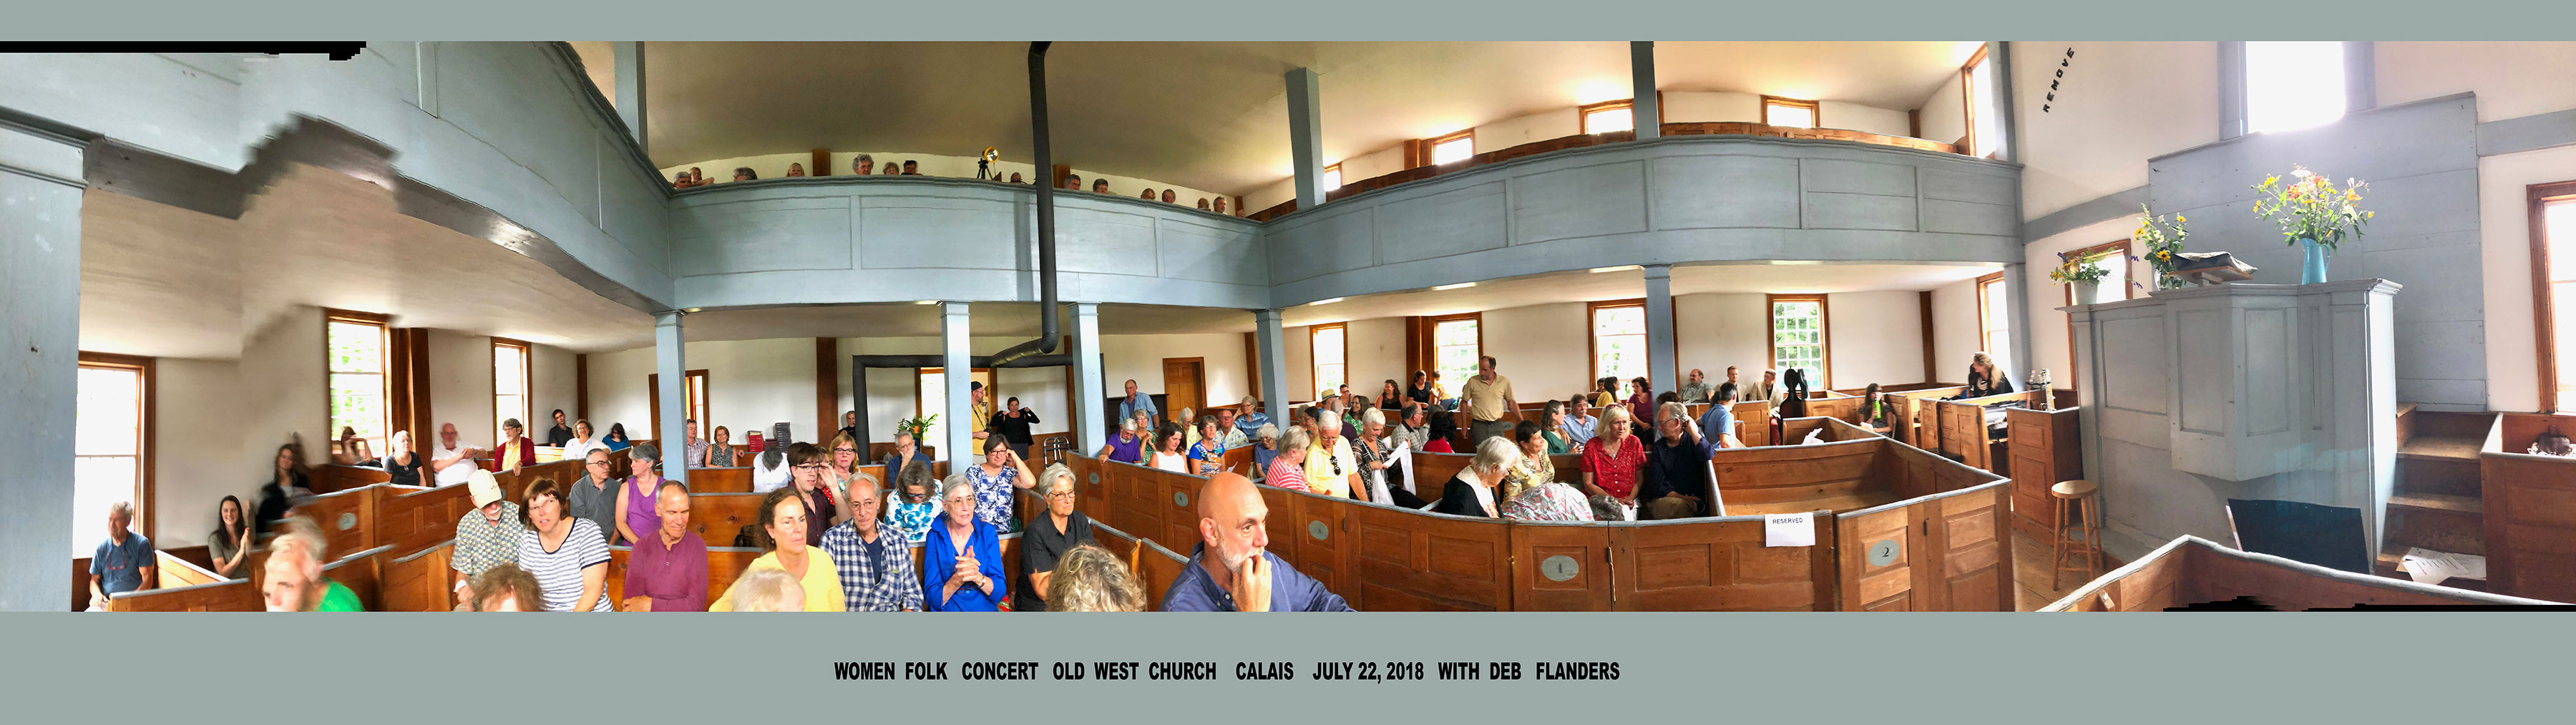 Deb Flanders' 20th Annual Folk Music Concert